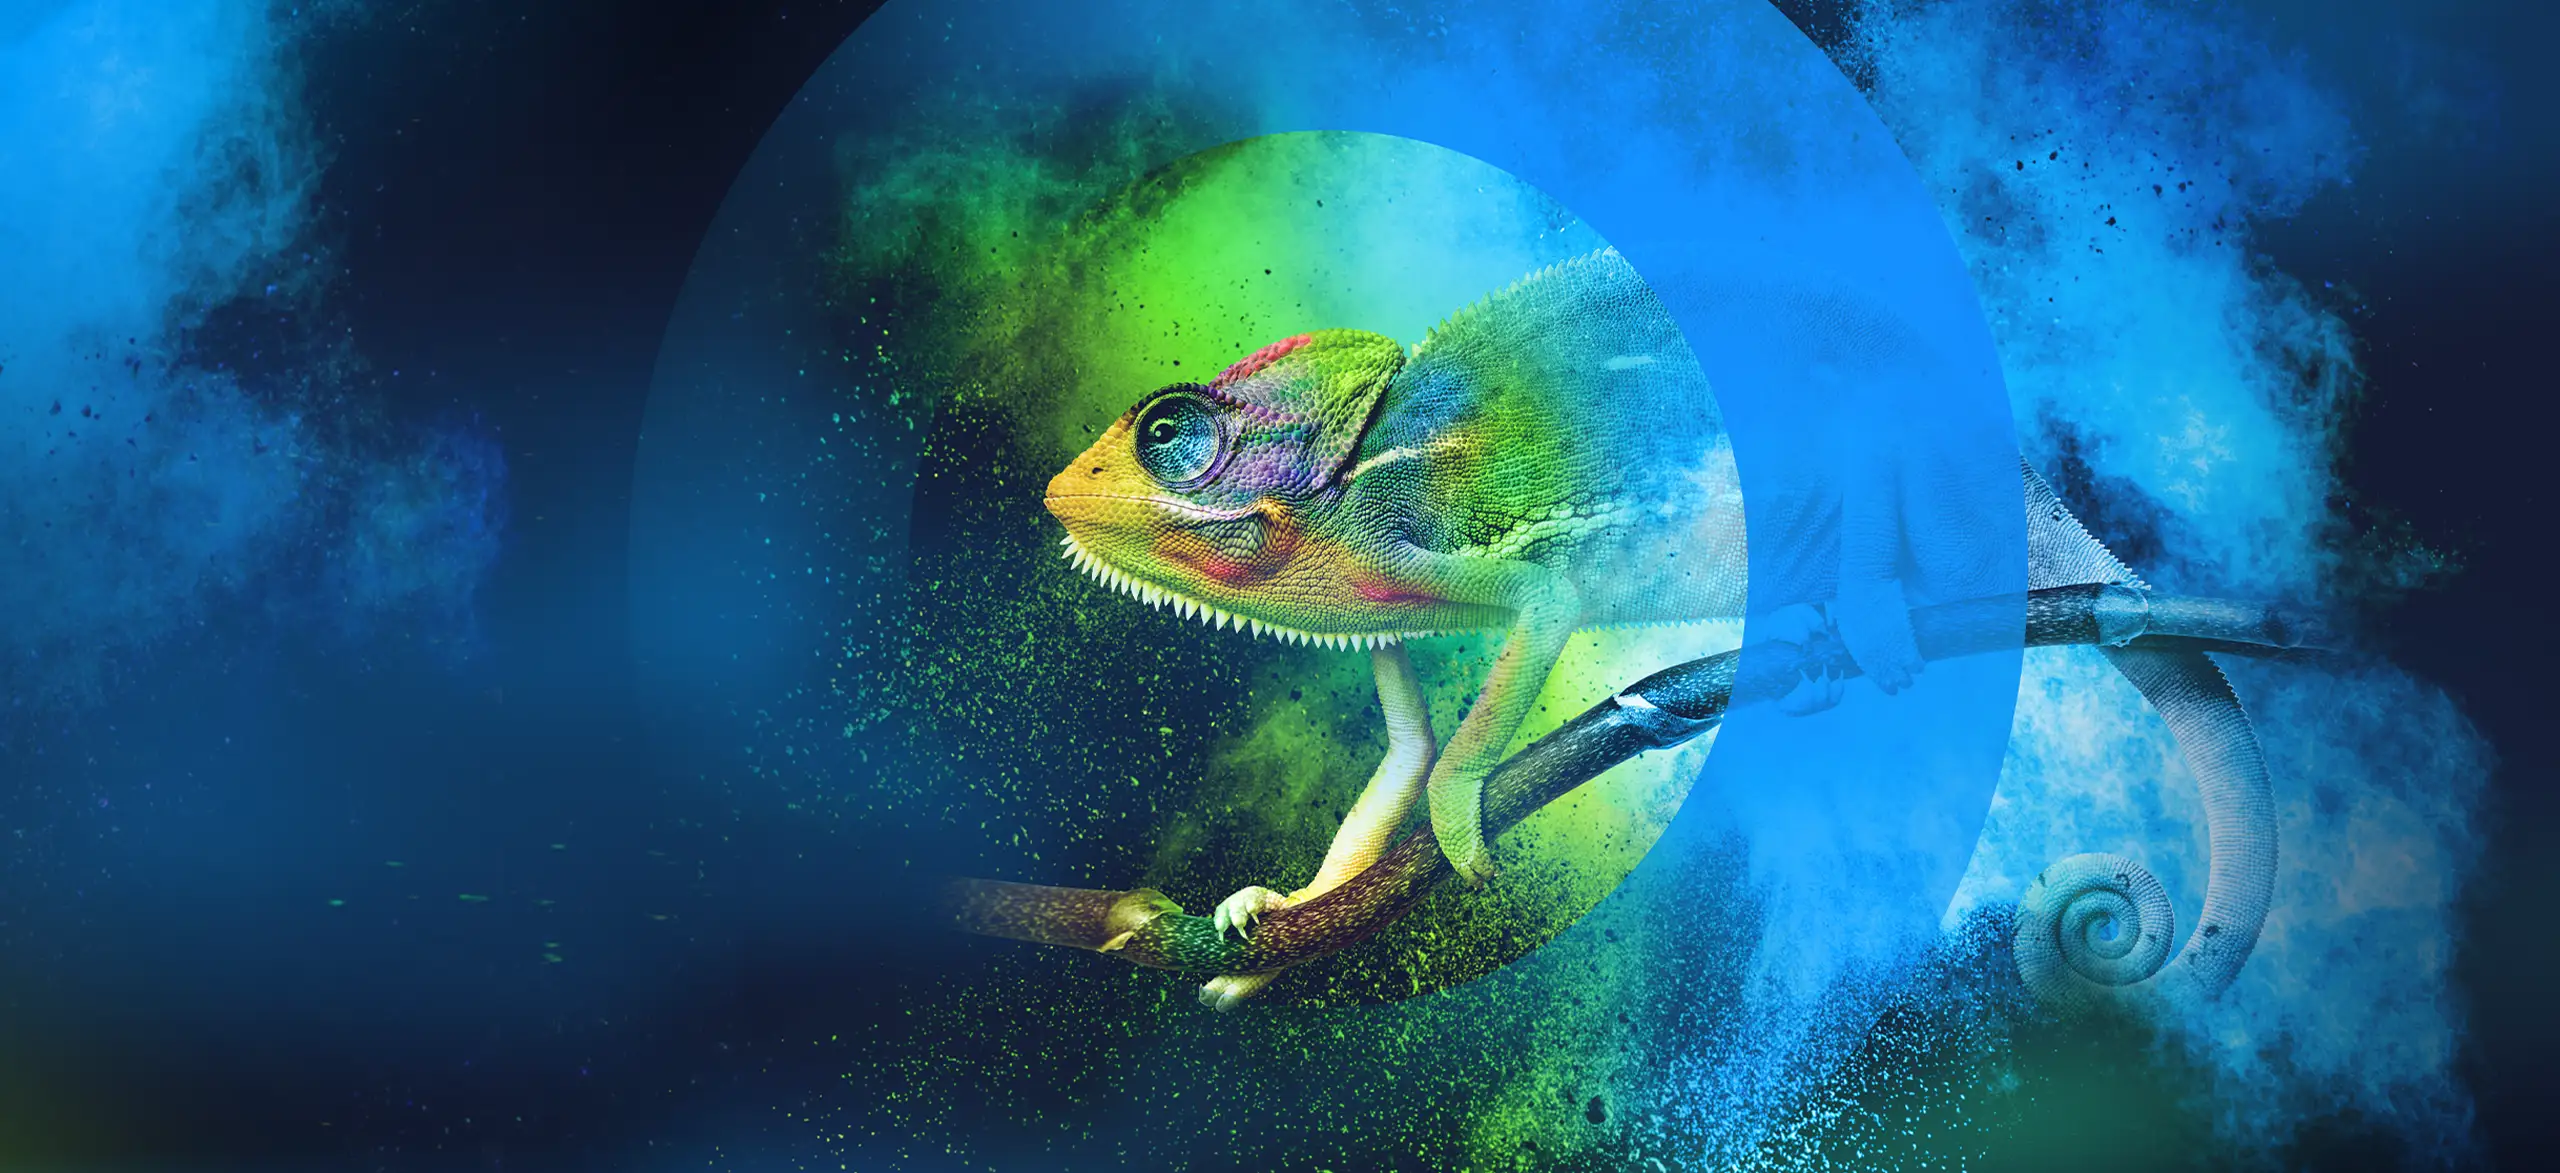 Hero visual: Chameleon